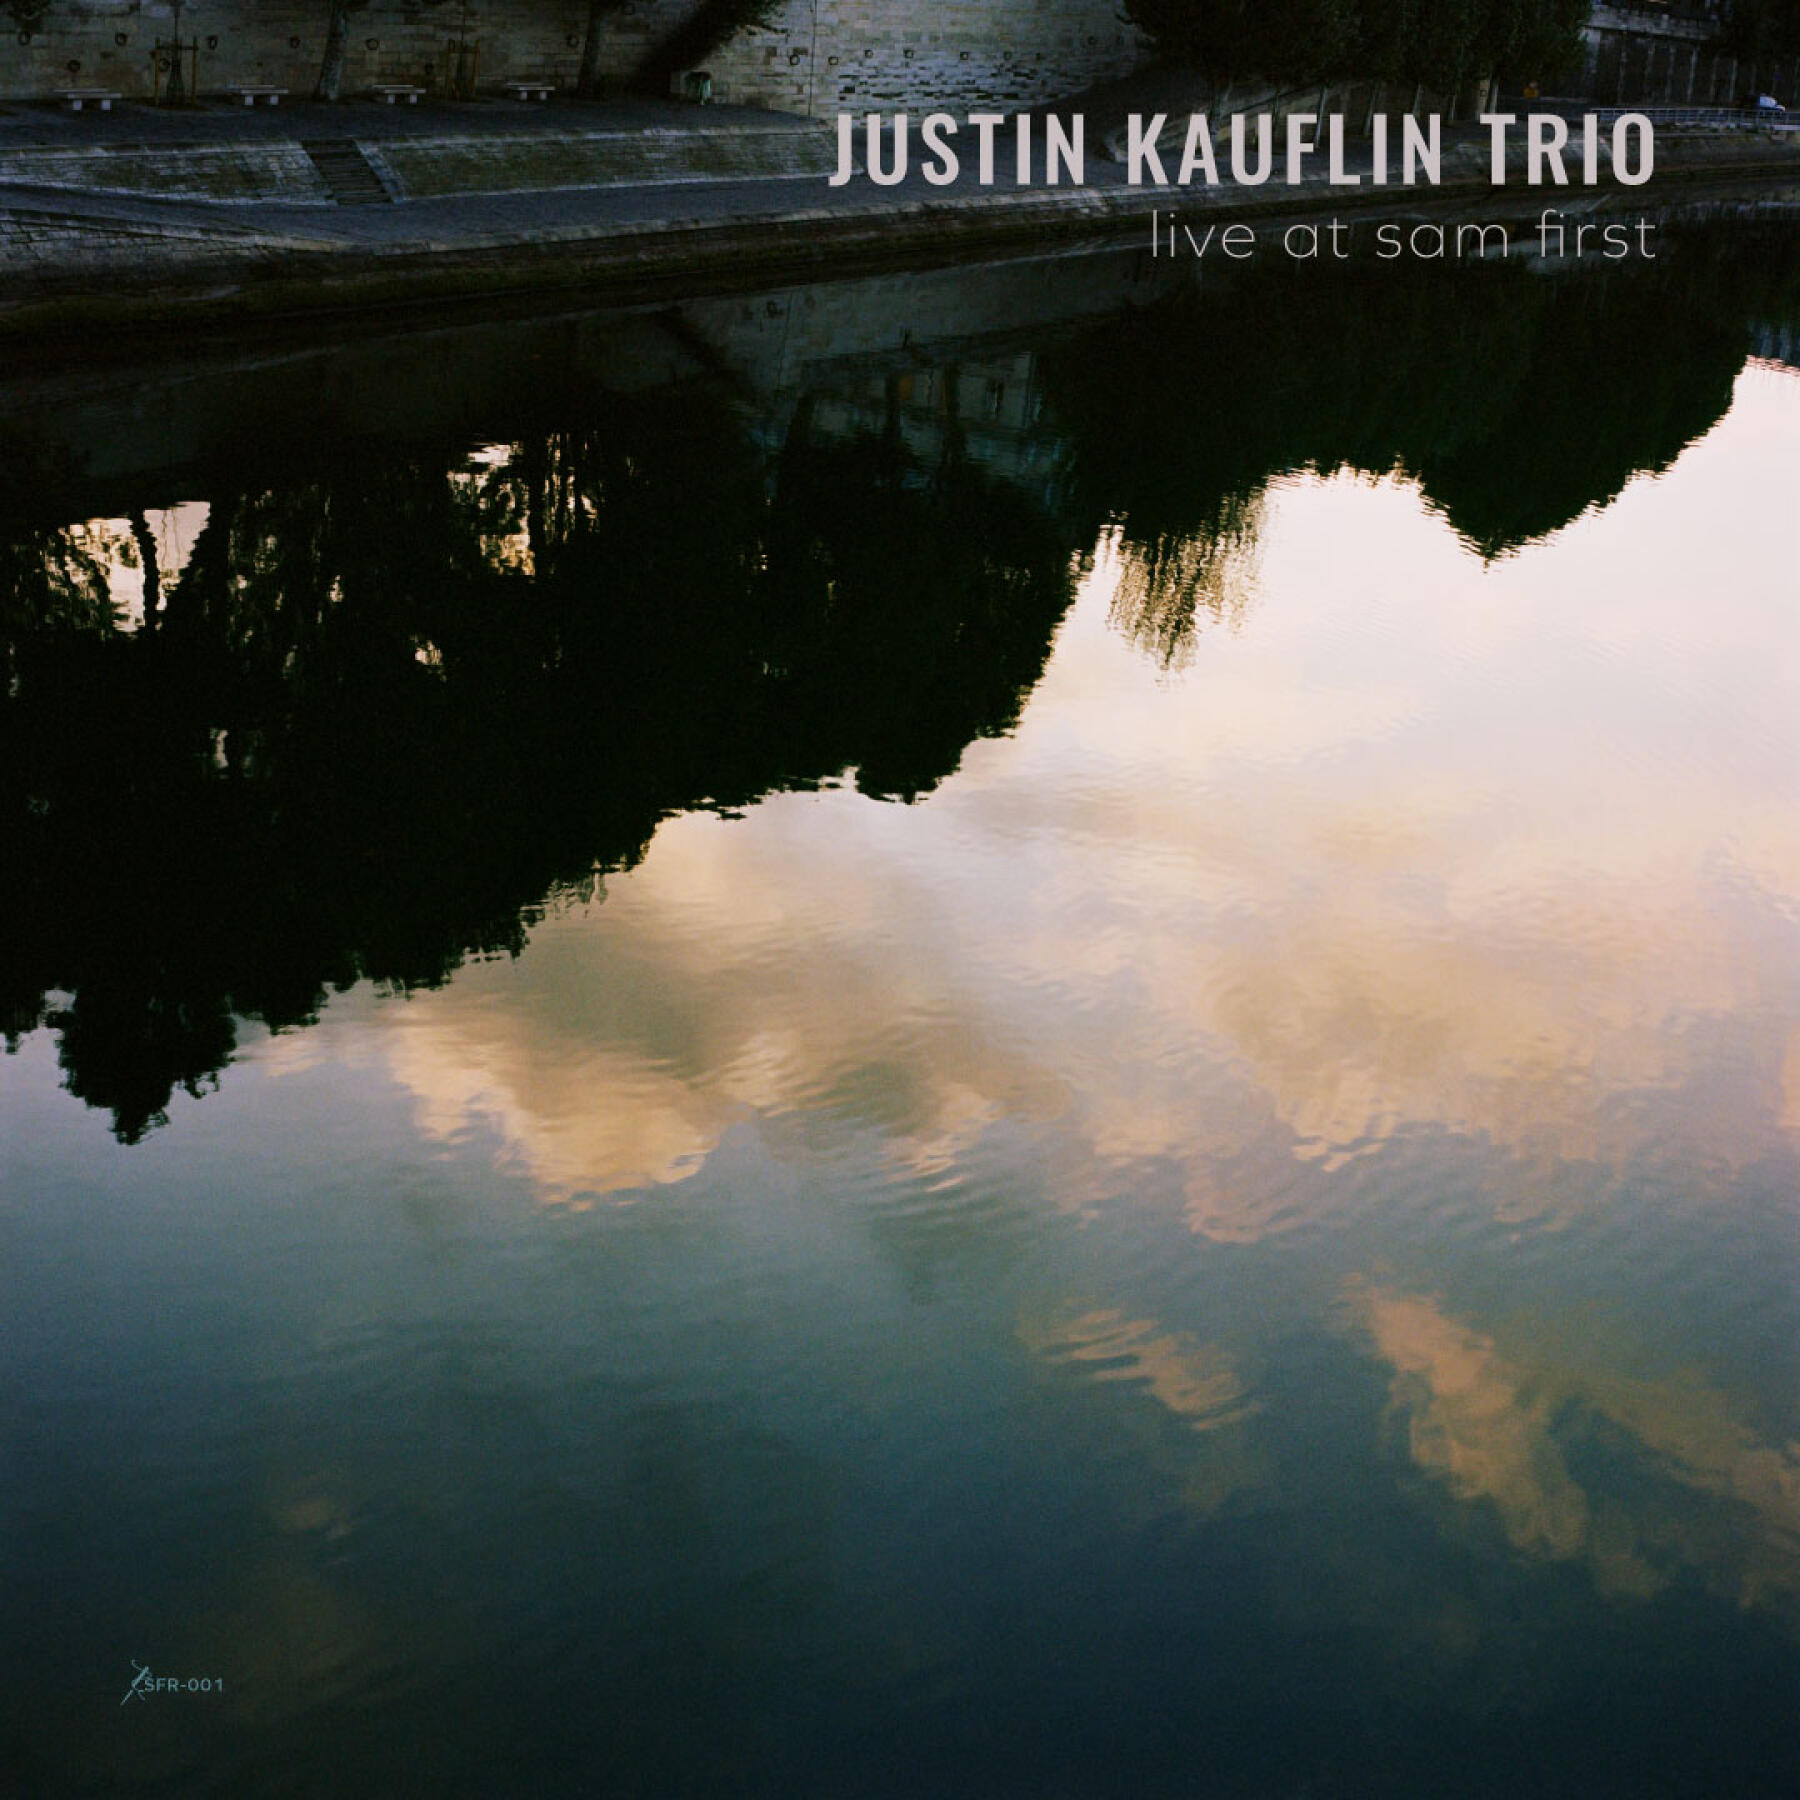 Justin Kauflin Trio Digital Release Out Next Week